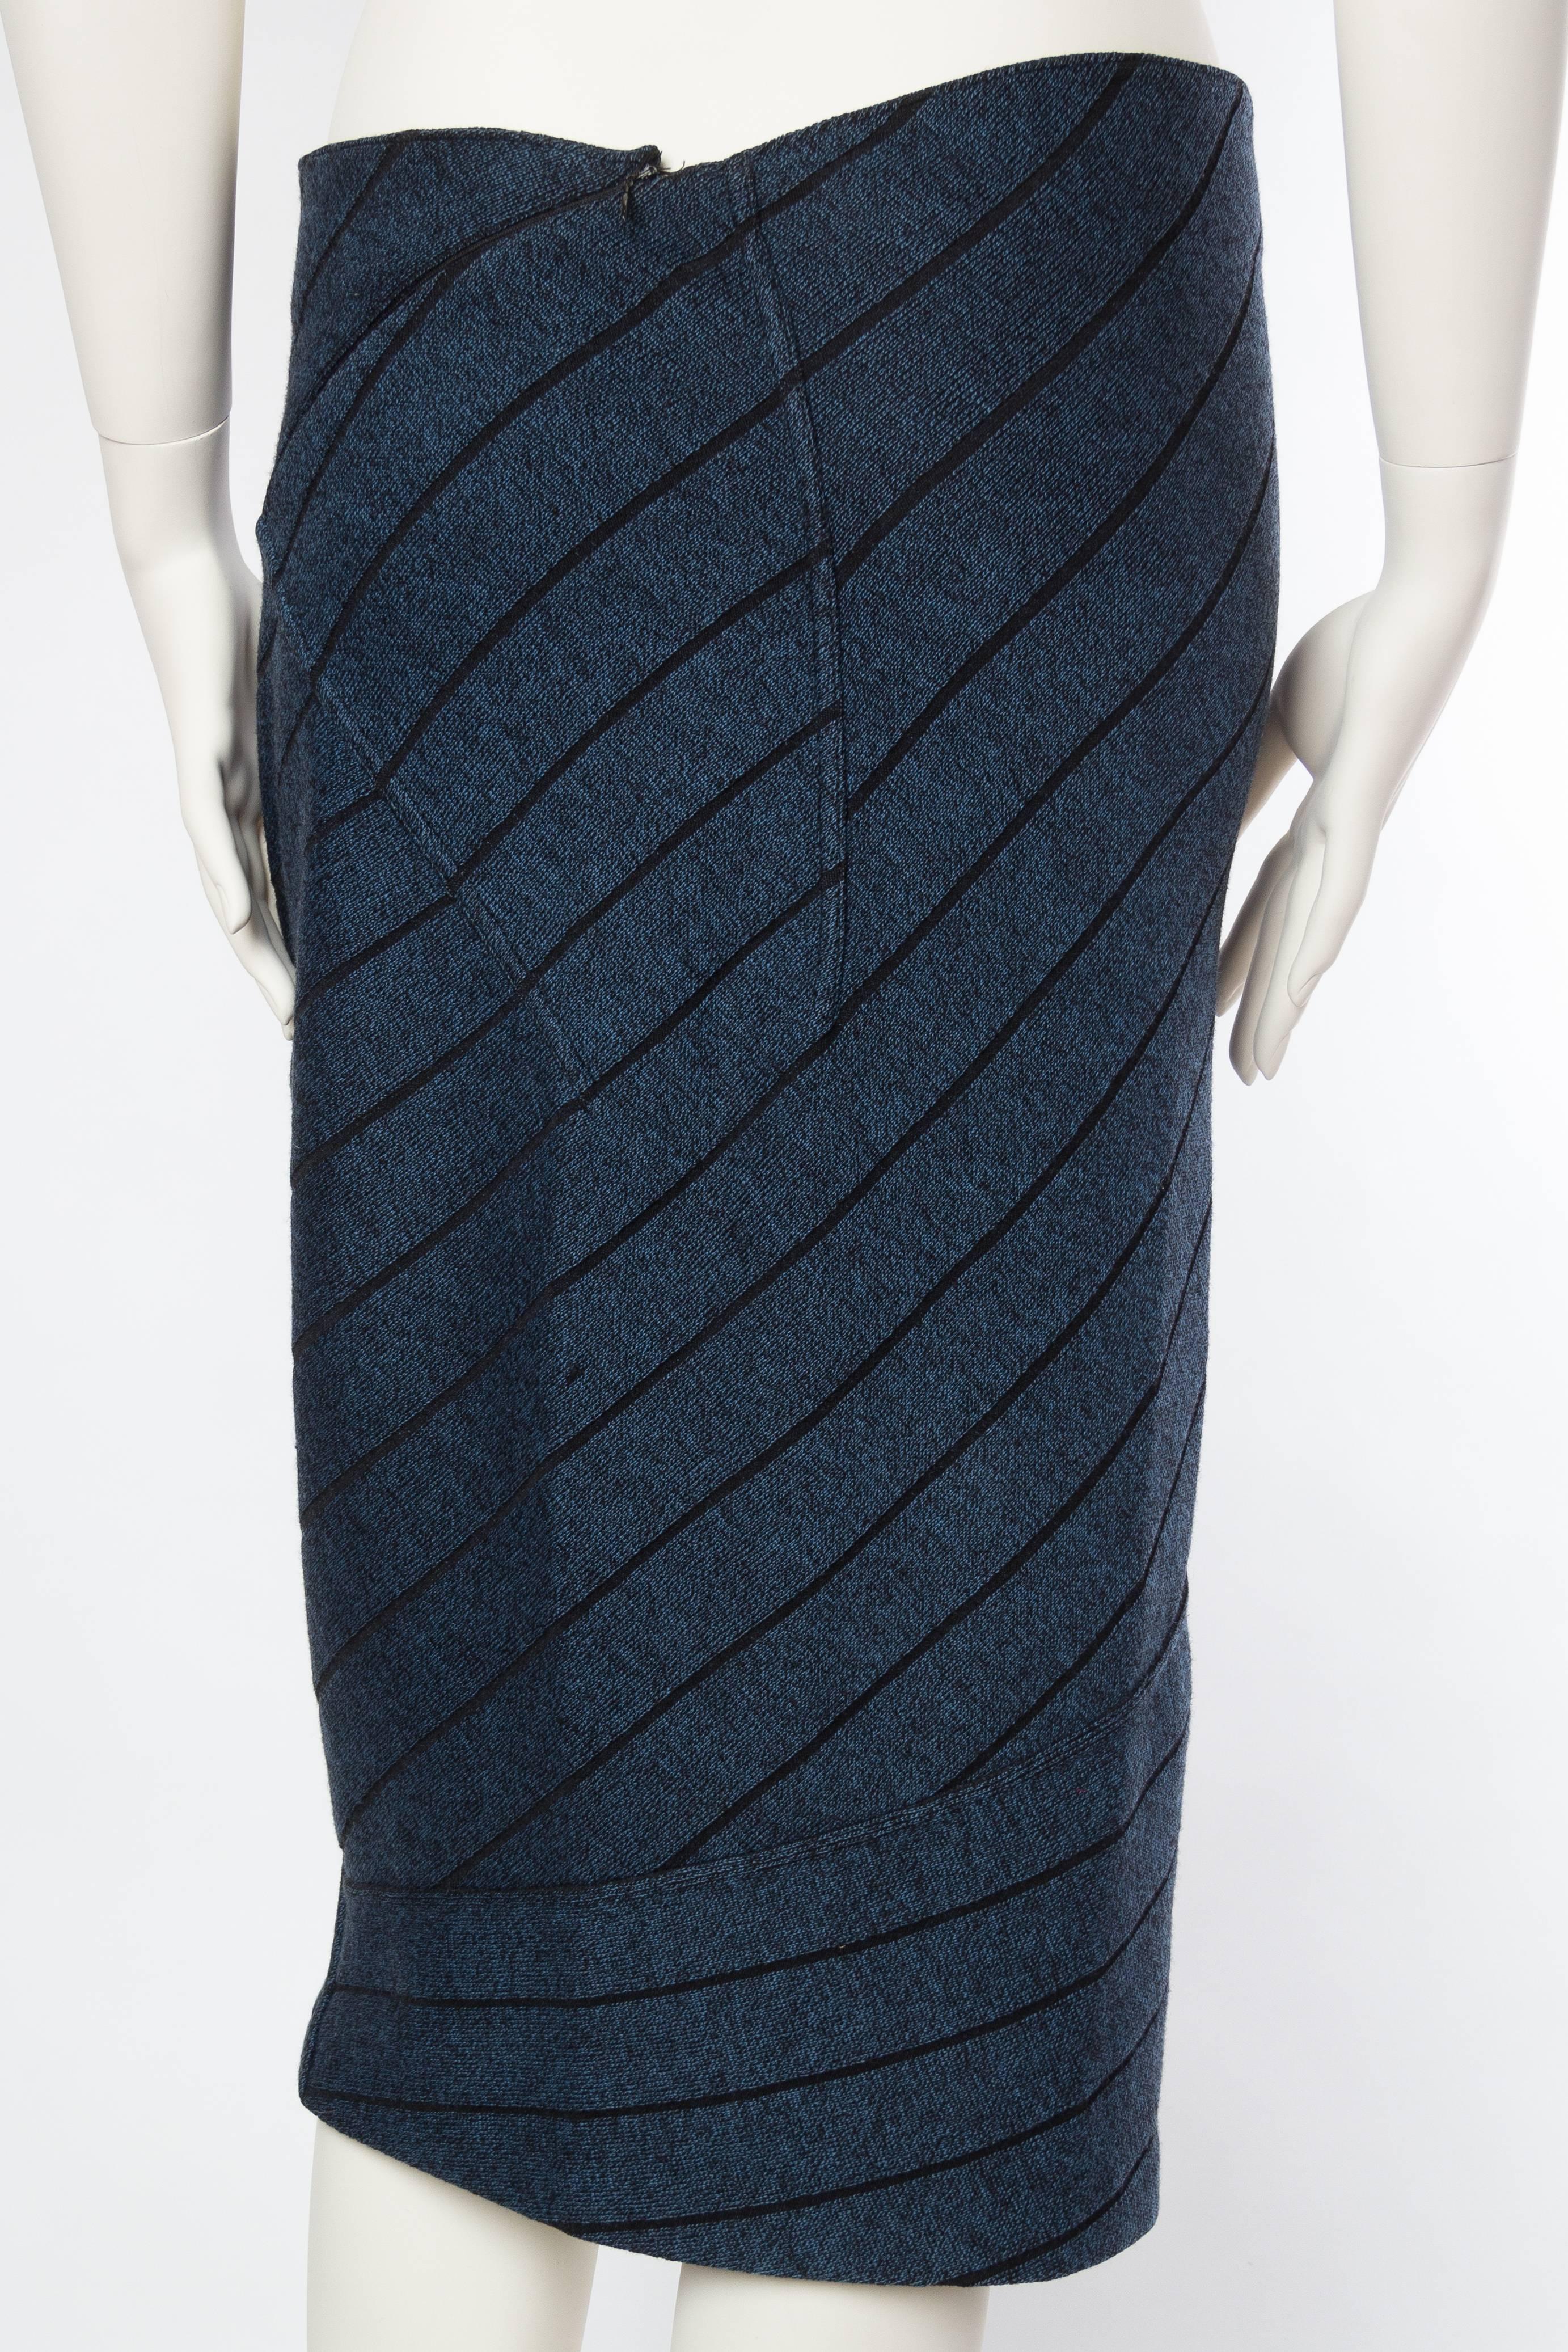 Women's 1980S AZZEDINE ALAIA Blue & Black Rayon Blend Knit High-Waisted Skirt For Sale